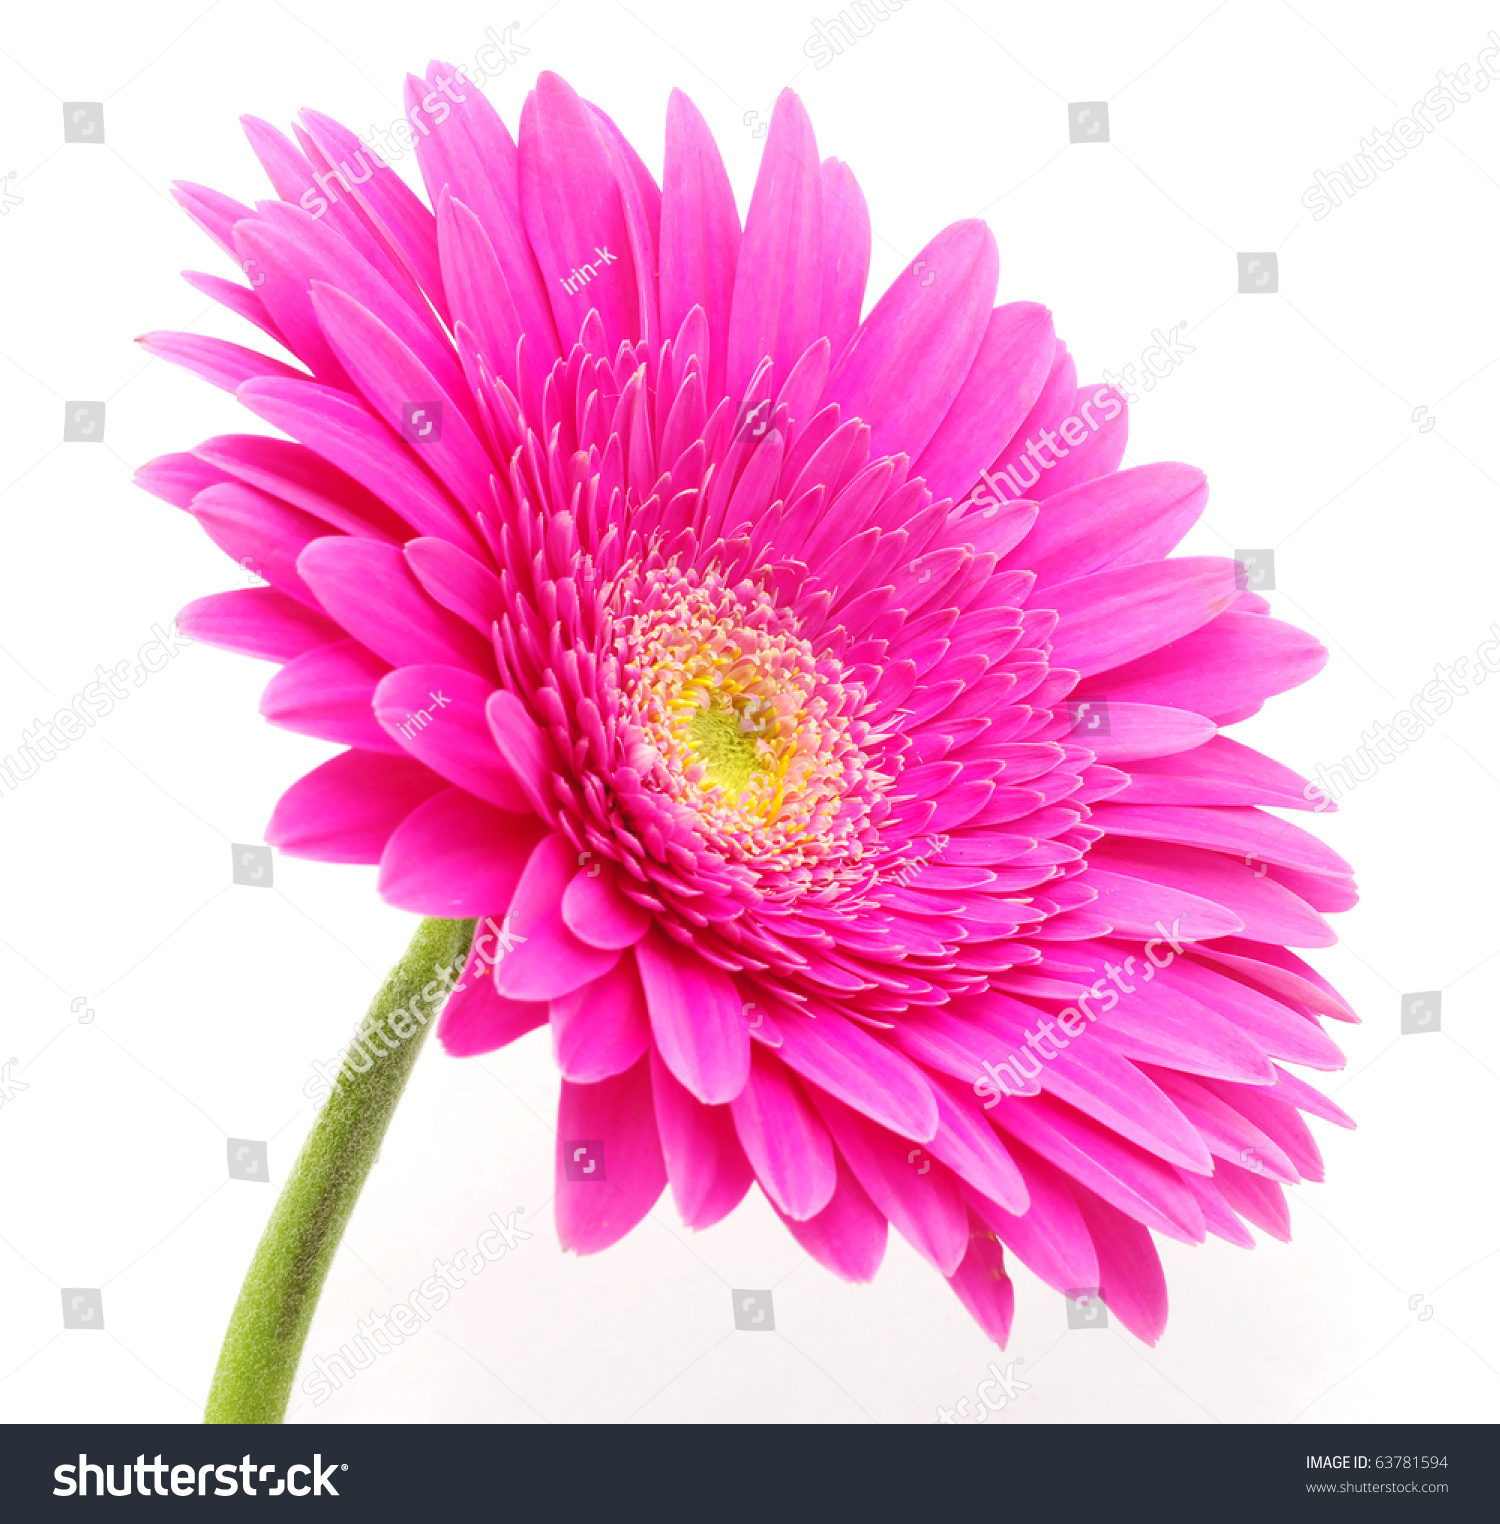 Gerbera Flower Stock Photo 63781594 - Shutterstock